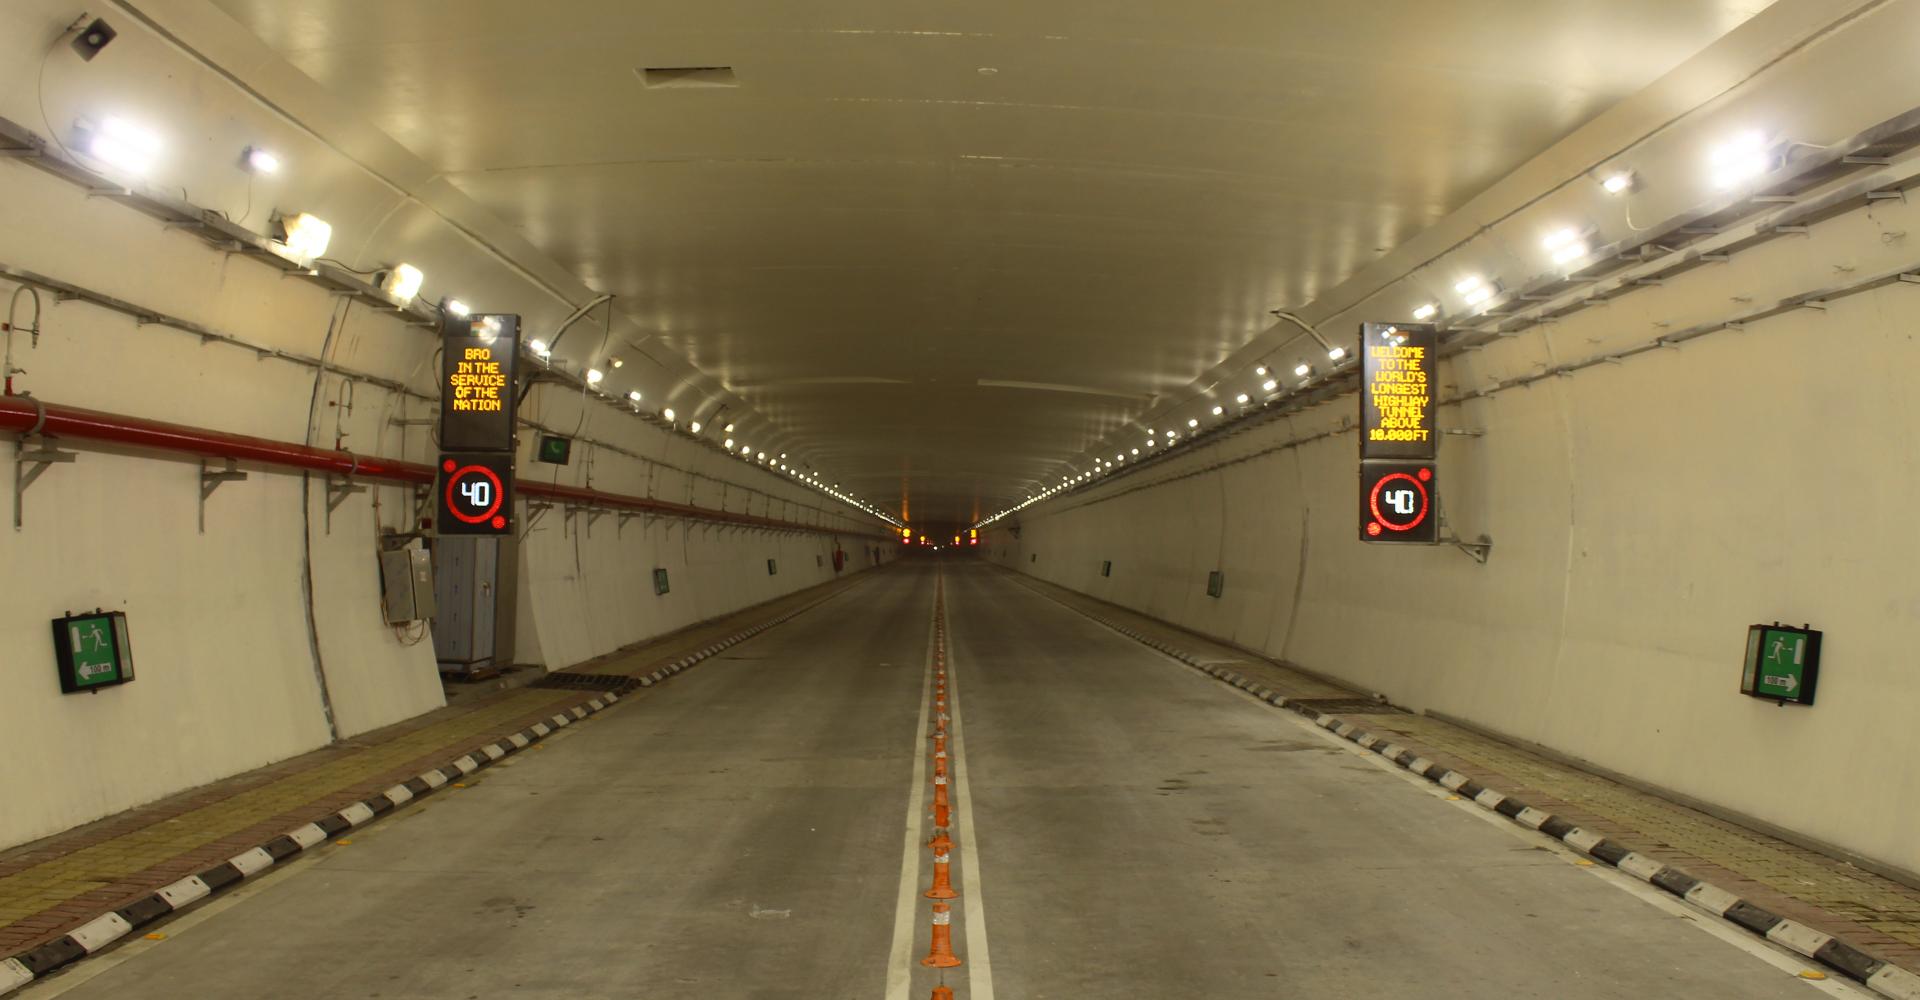 Tunnel intérieur